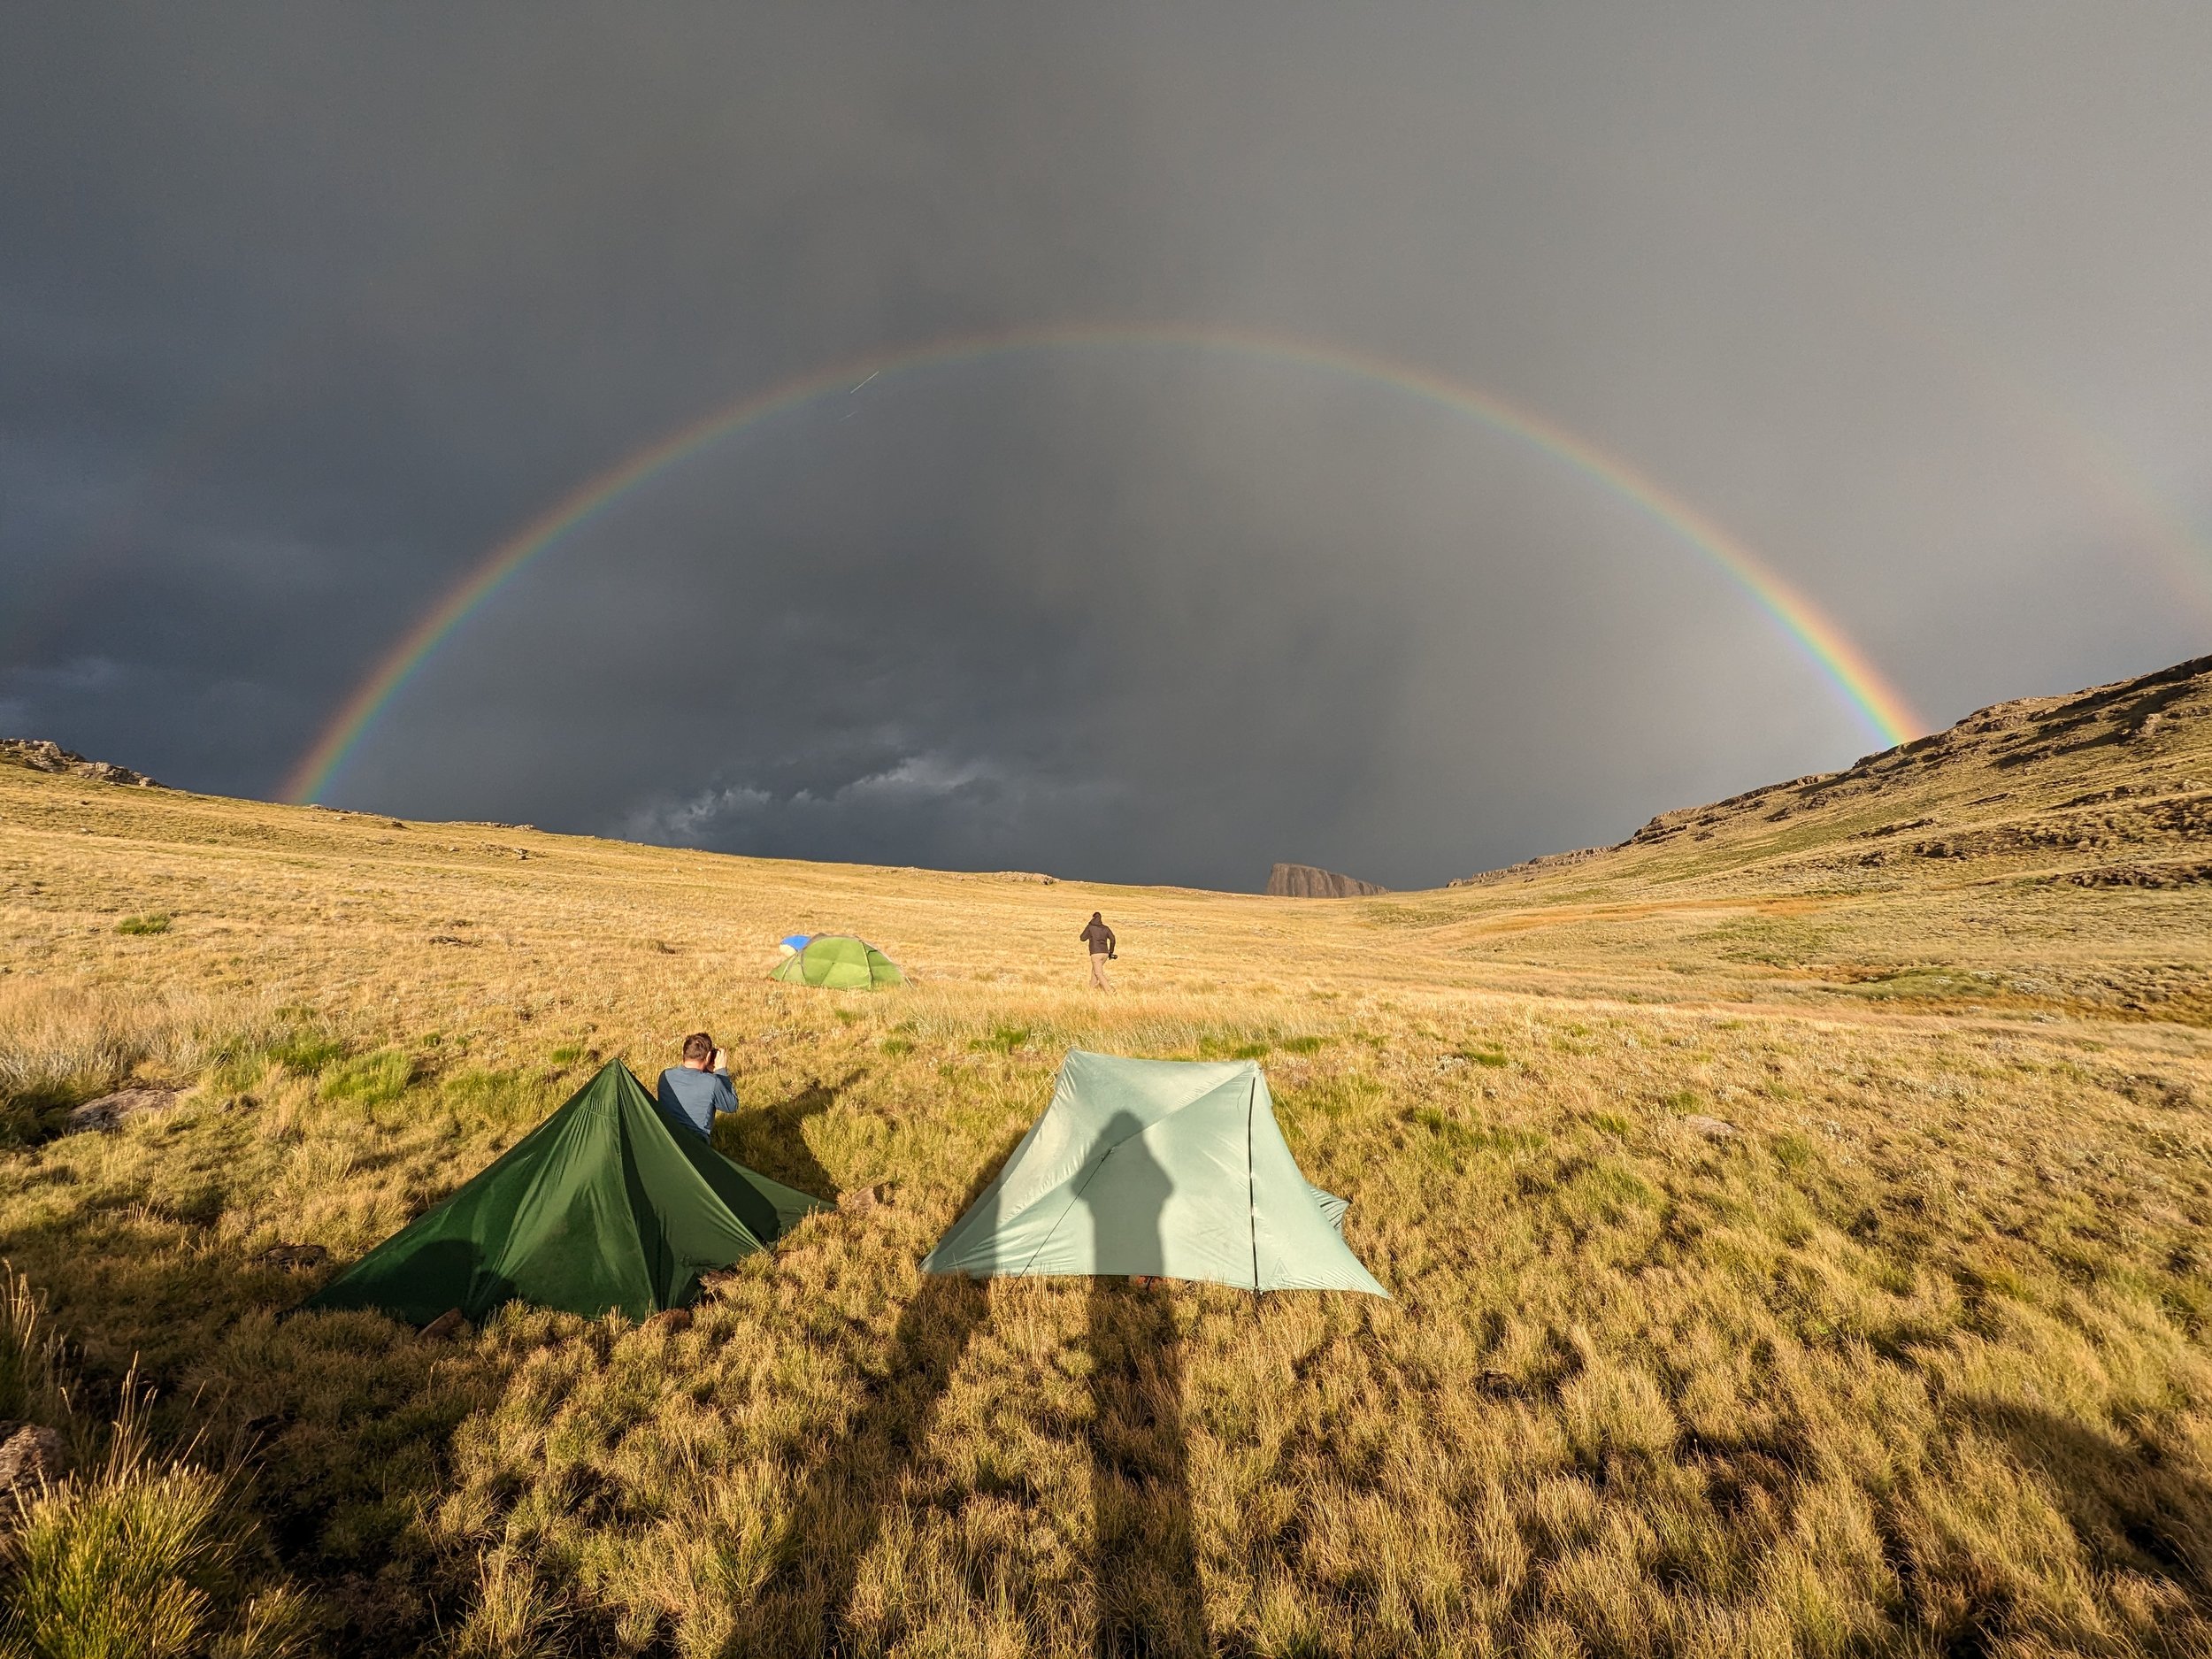 Double Rainbow over Camp